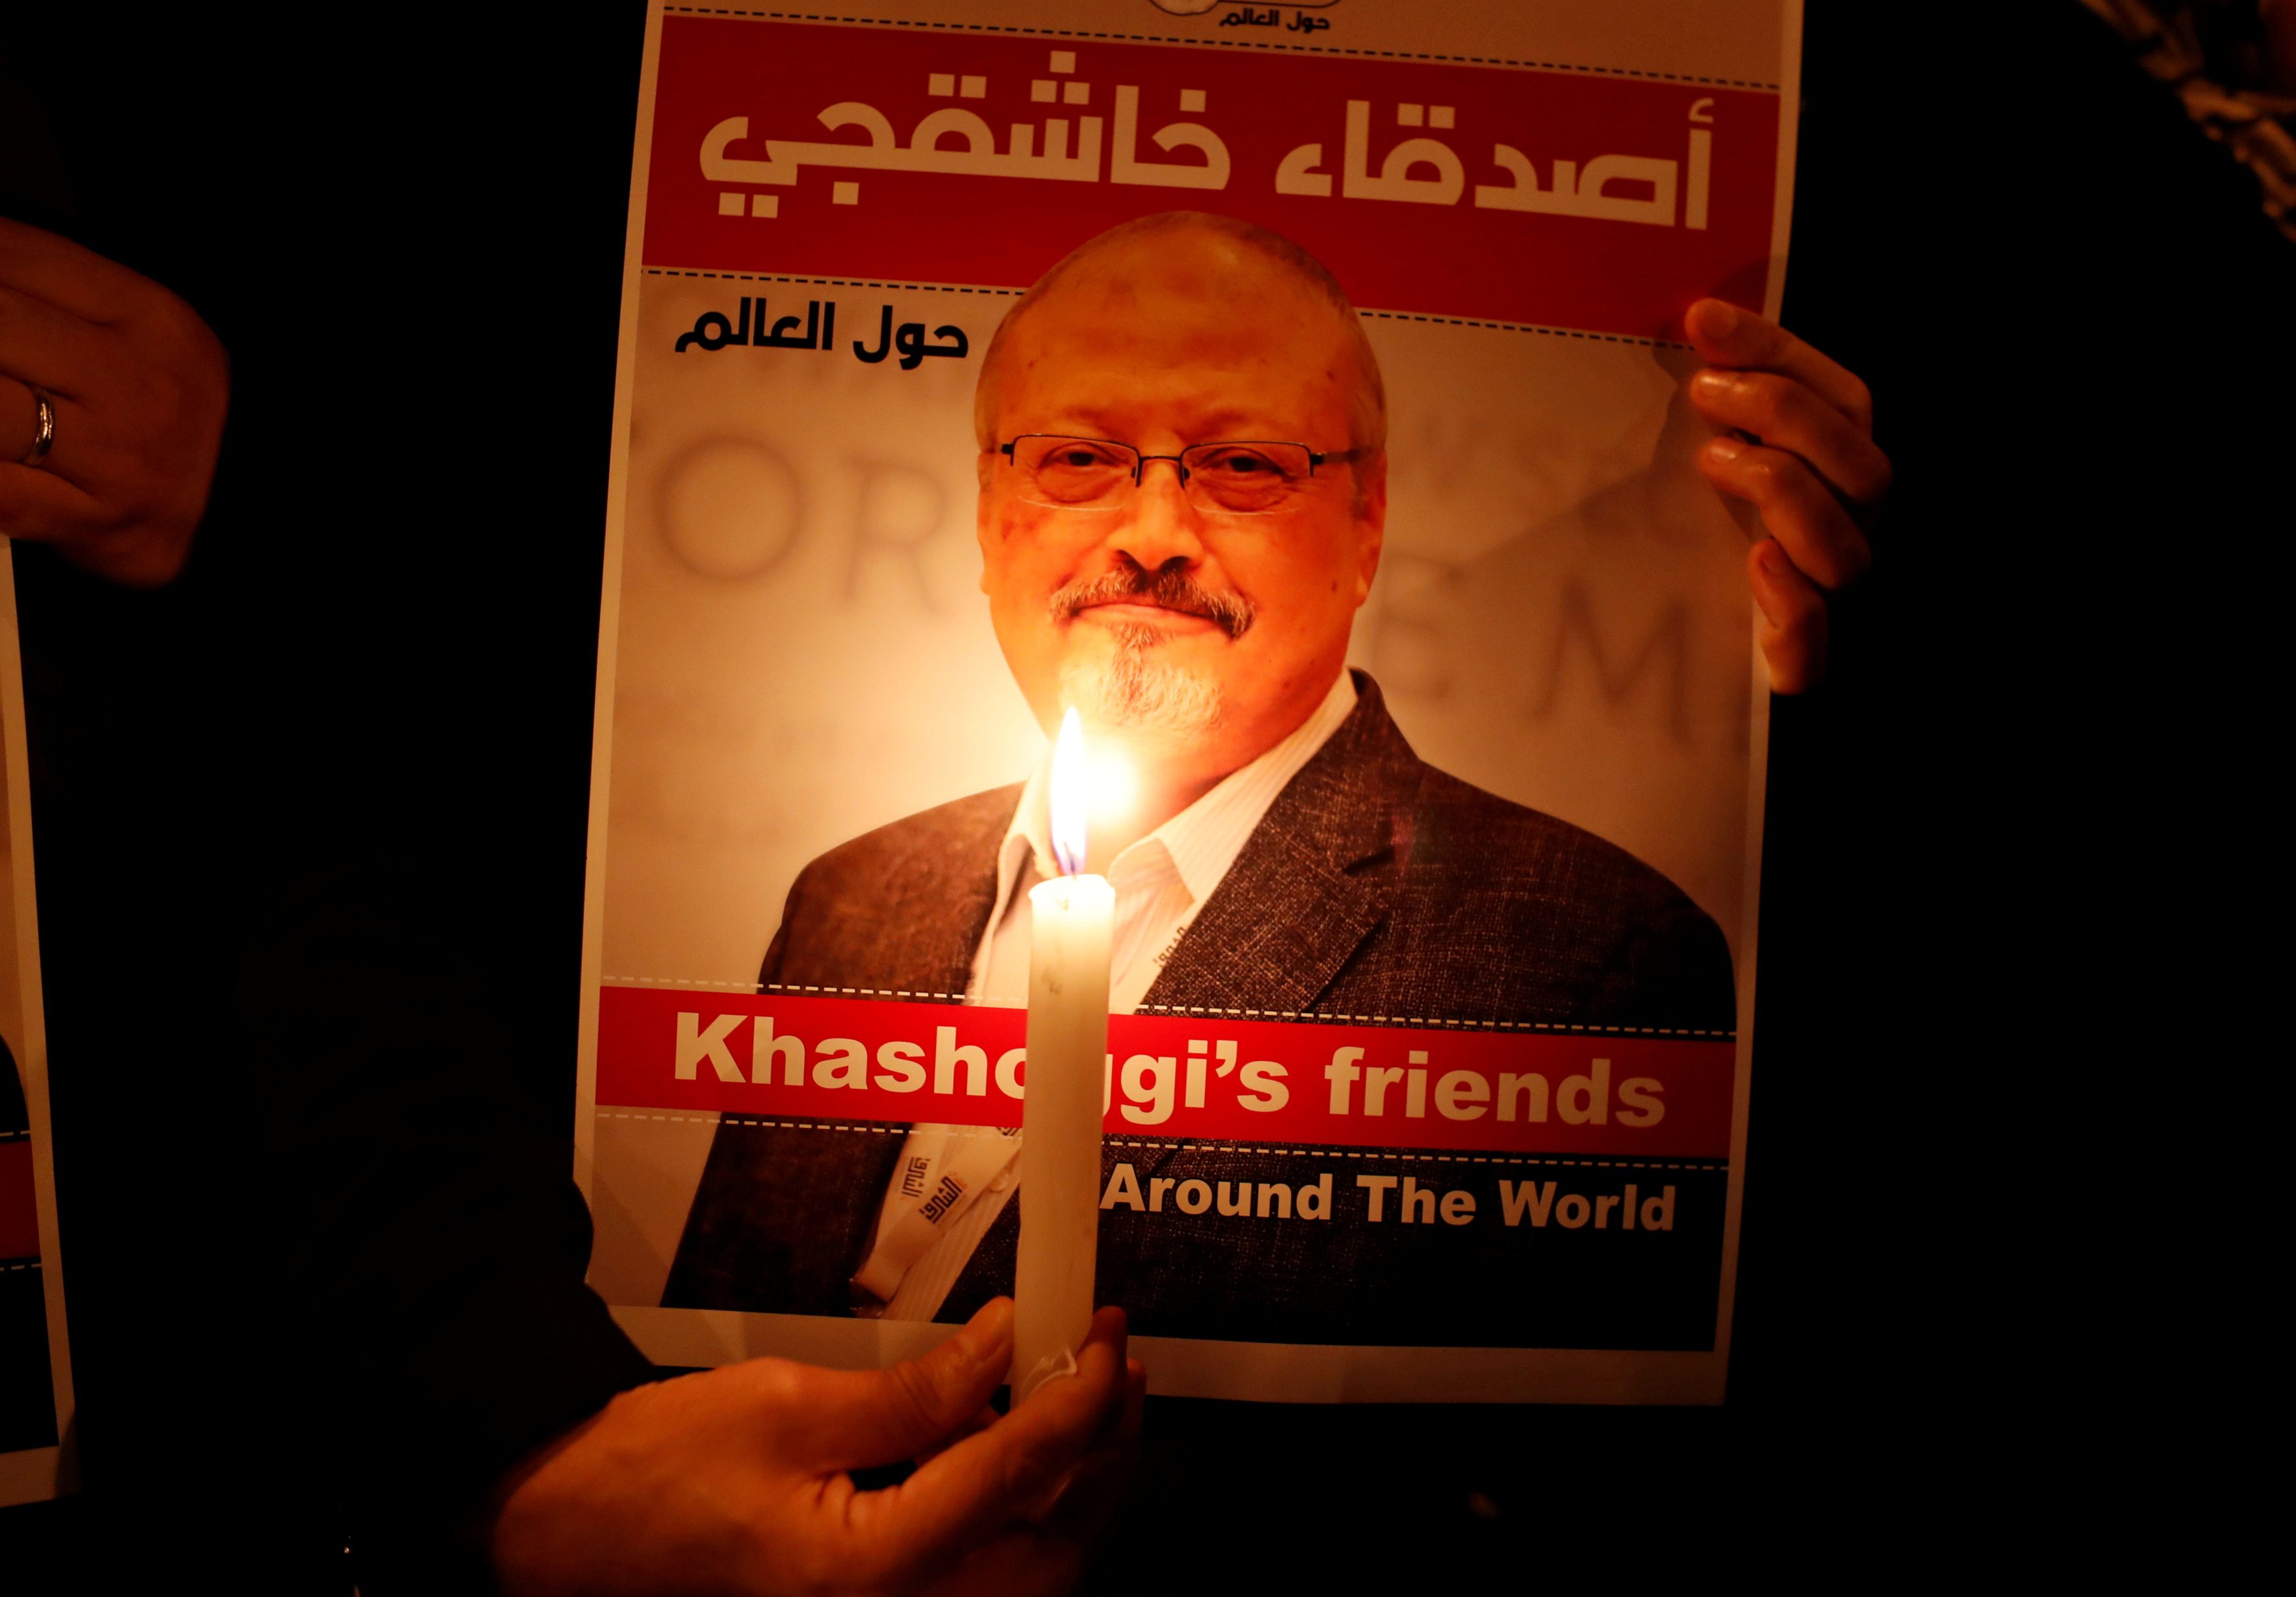 Saudi de facto ruler approved operation that led to Khashoggi’s death – US